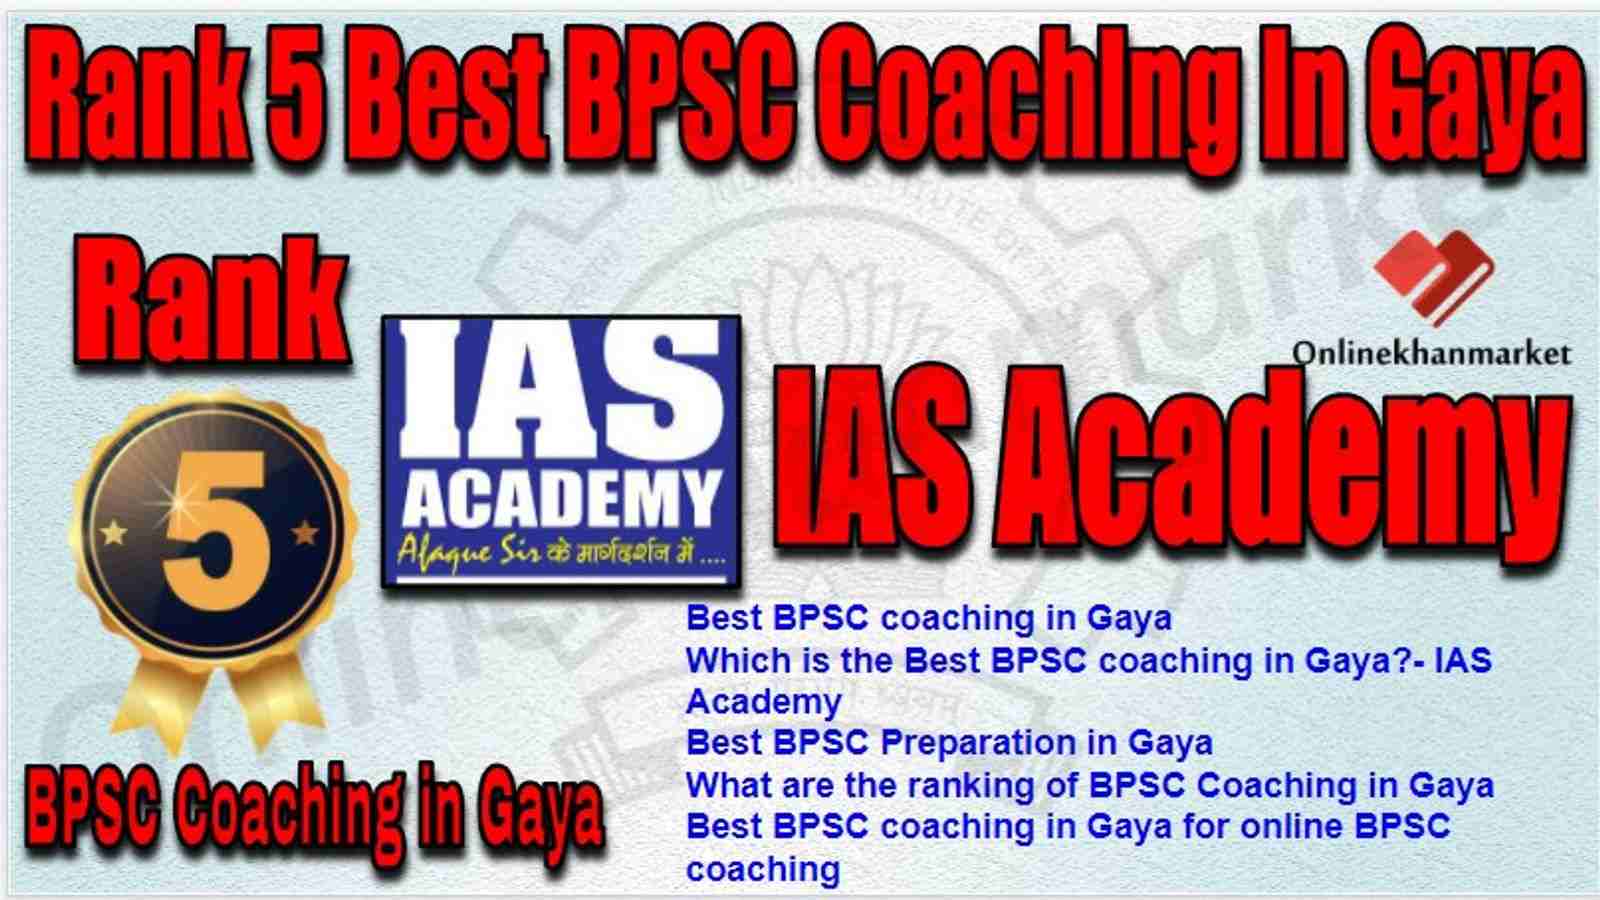 Rank 5 Best BPSC Coaching in gaya